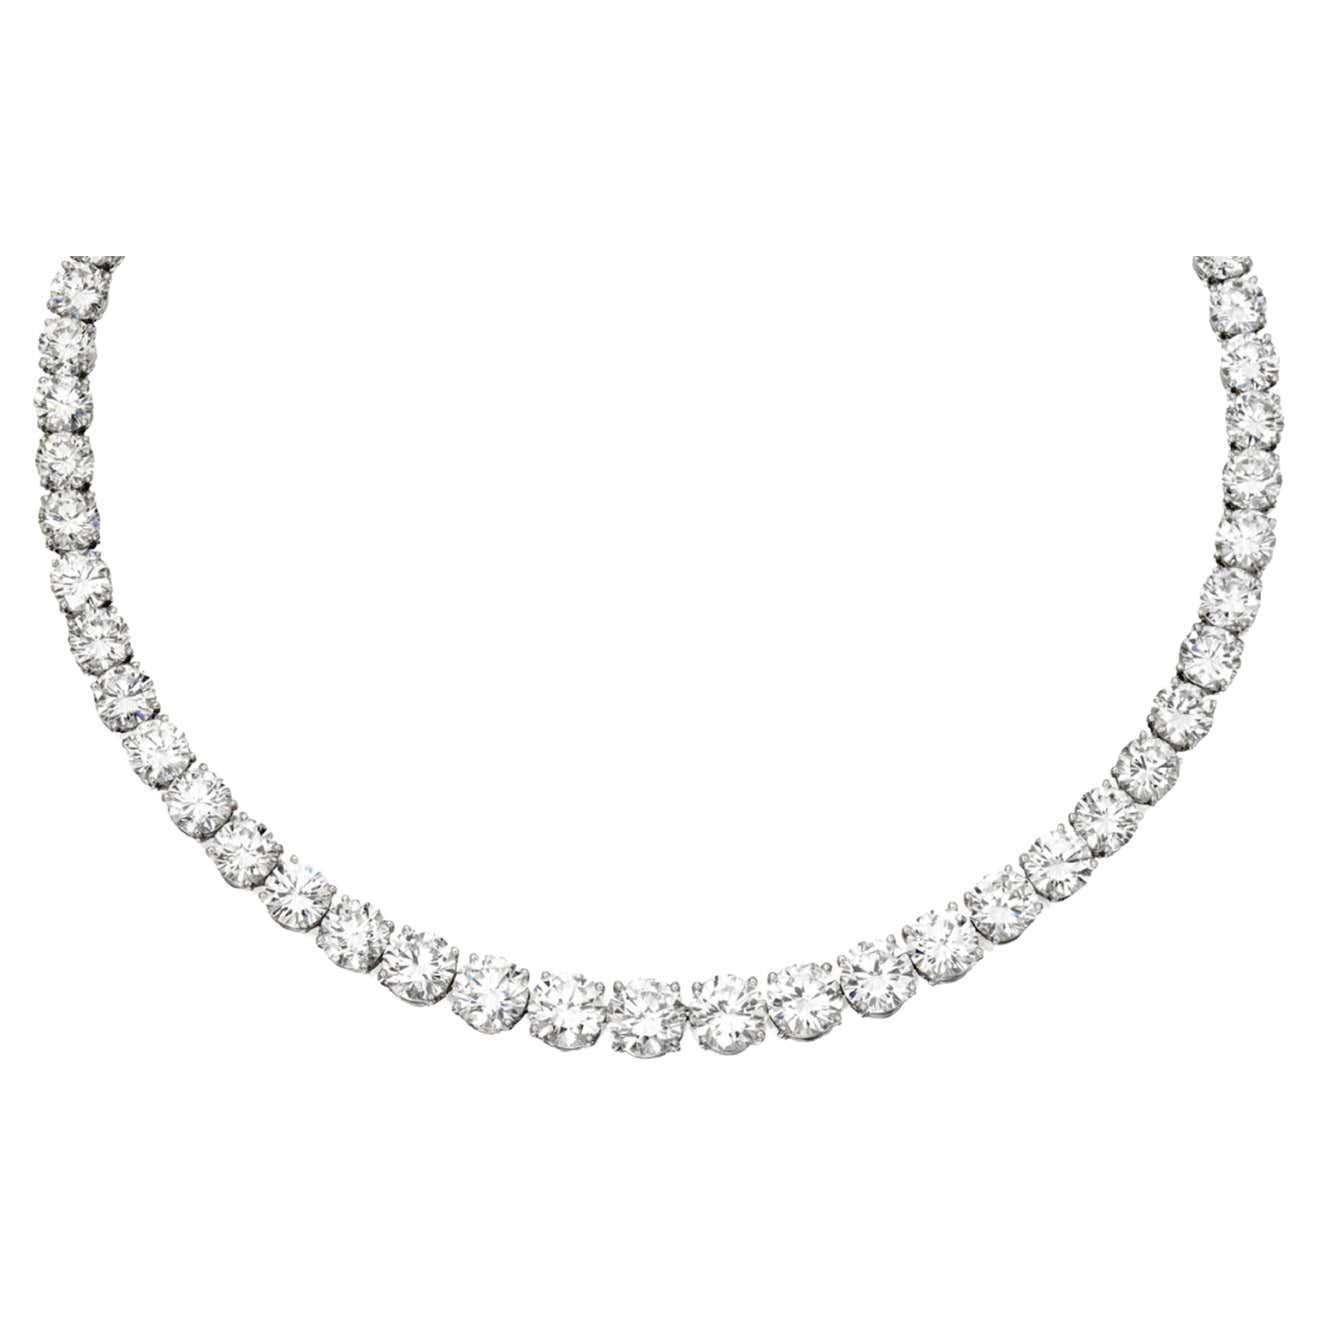 25 carat diamond tennis necklace